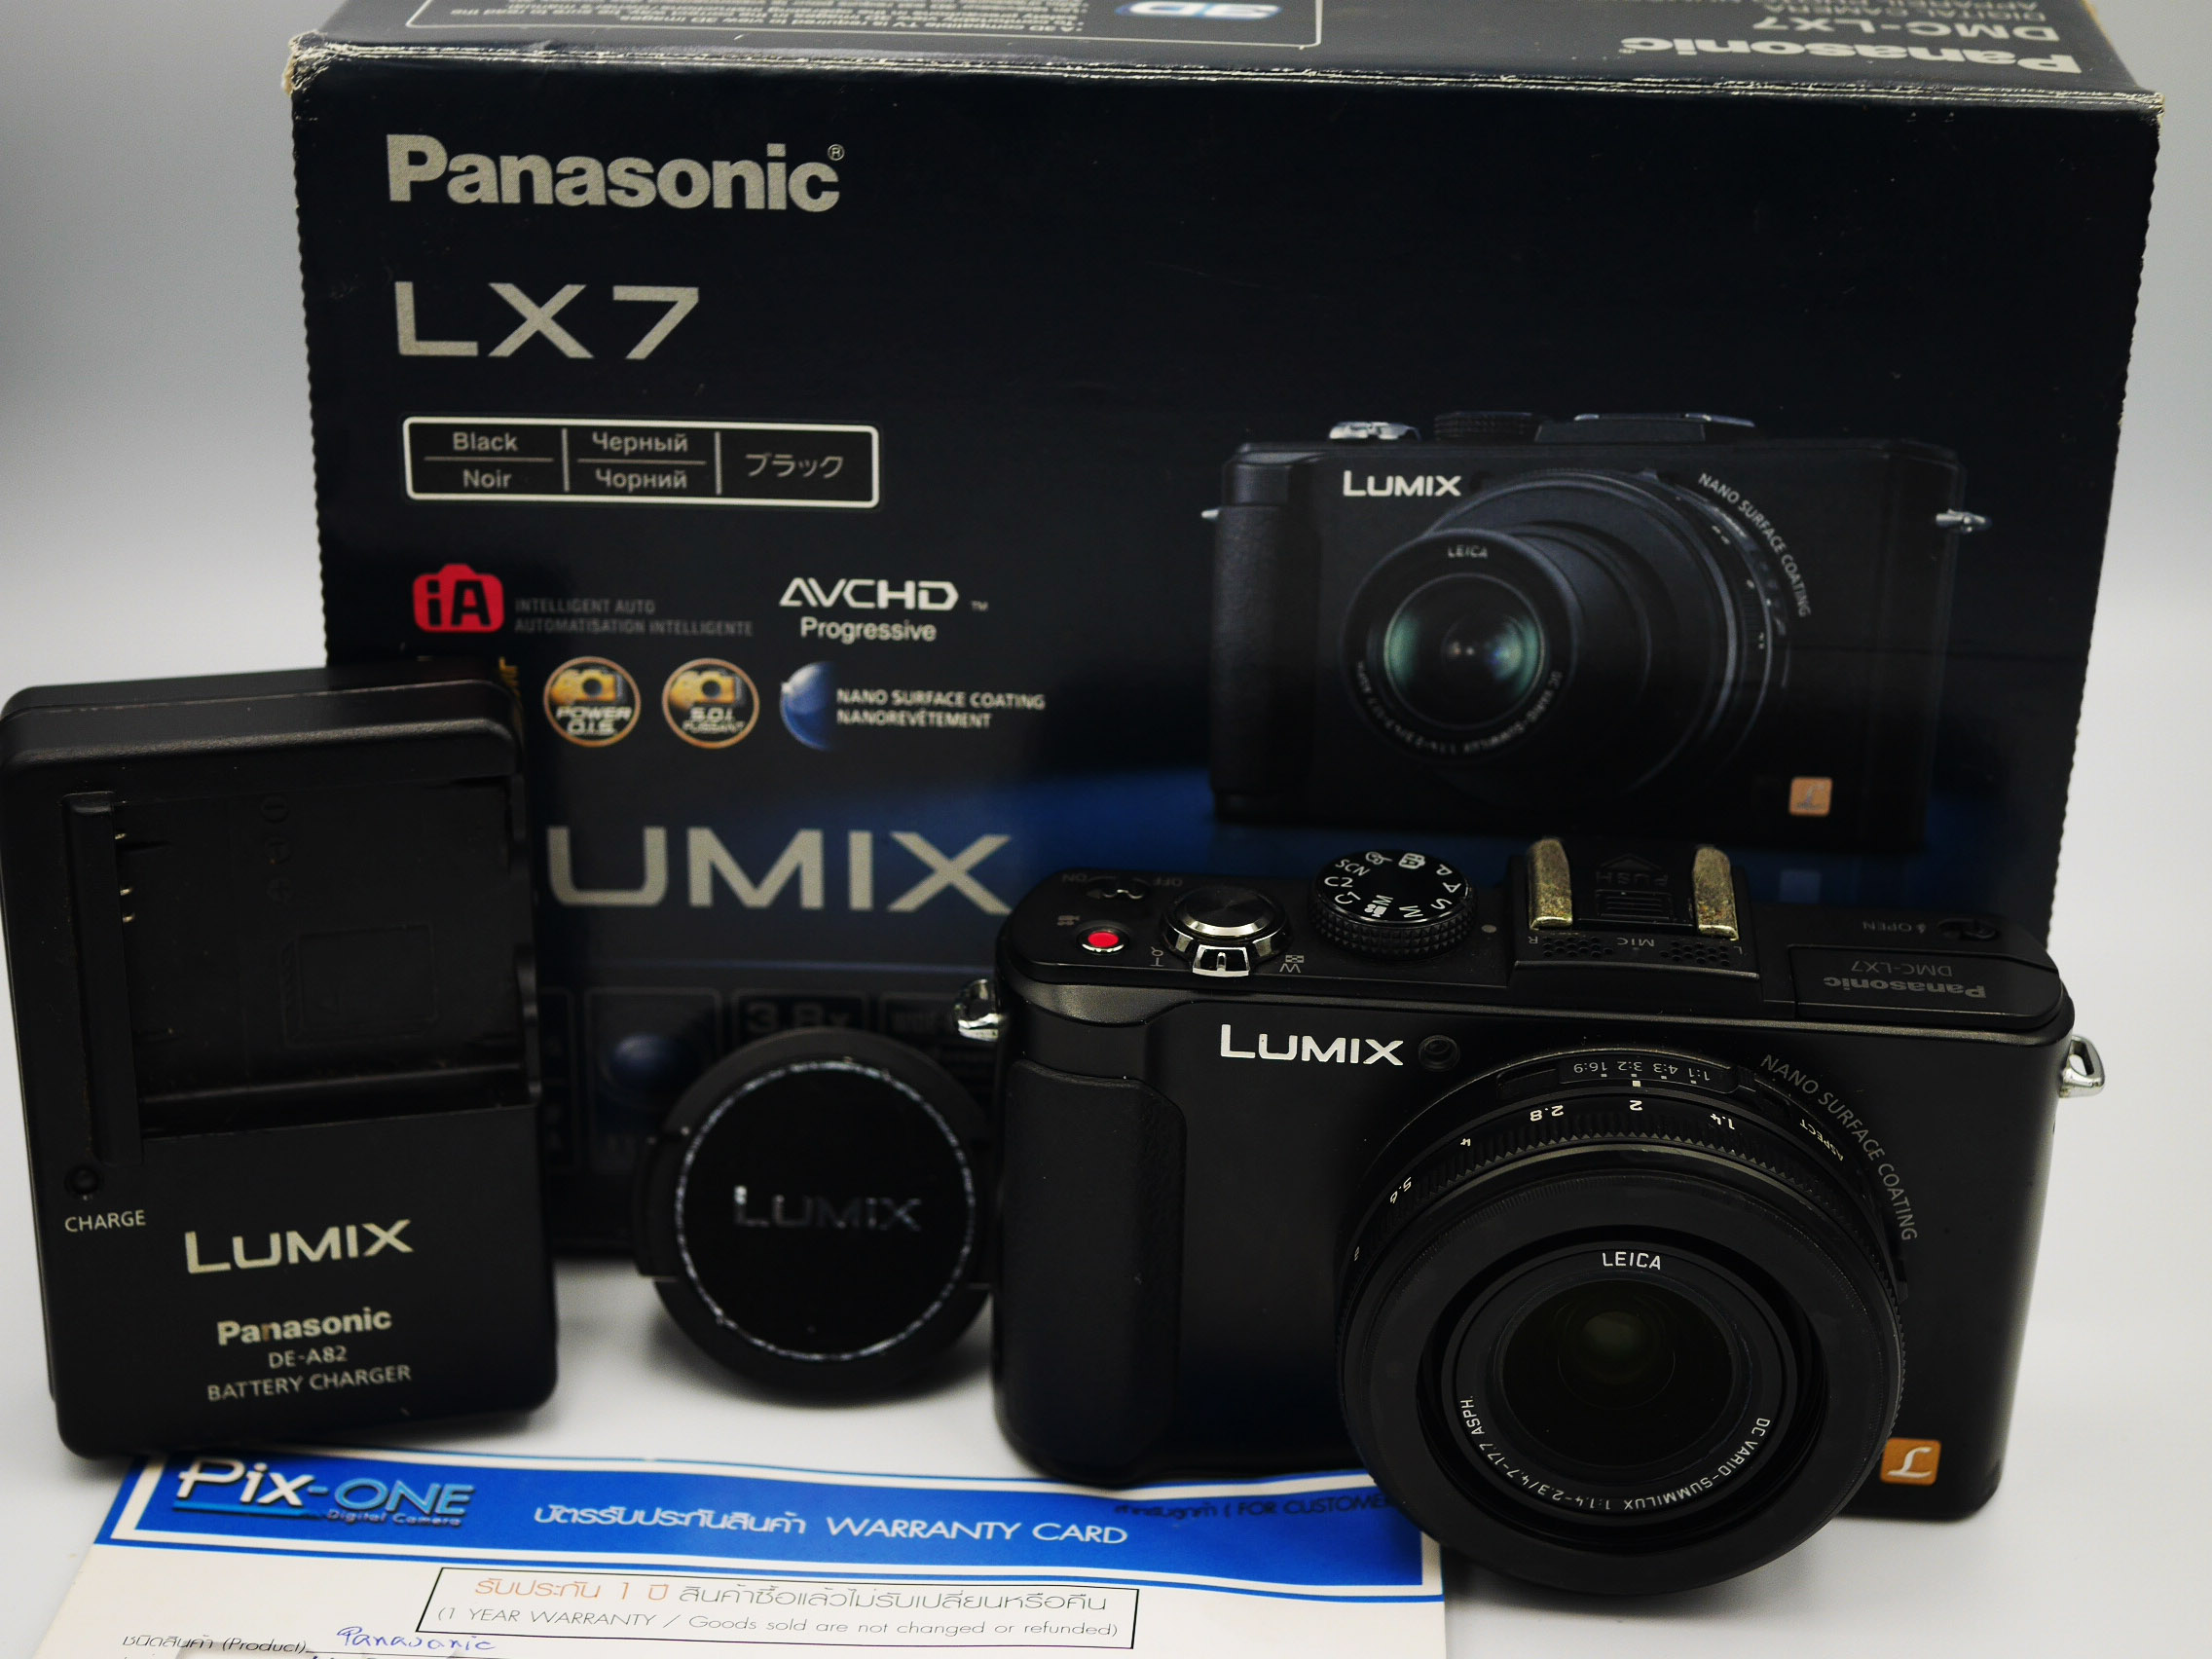 Panasonic Lumix LX7 Compact Hi-End camera in Box with Leica Vario-Summilux 24-90mm F1.4-2.3 ASPH. ZOOM LENS, DMC-LX7, LX-7